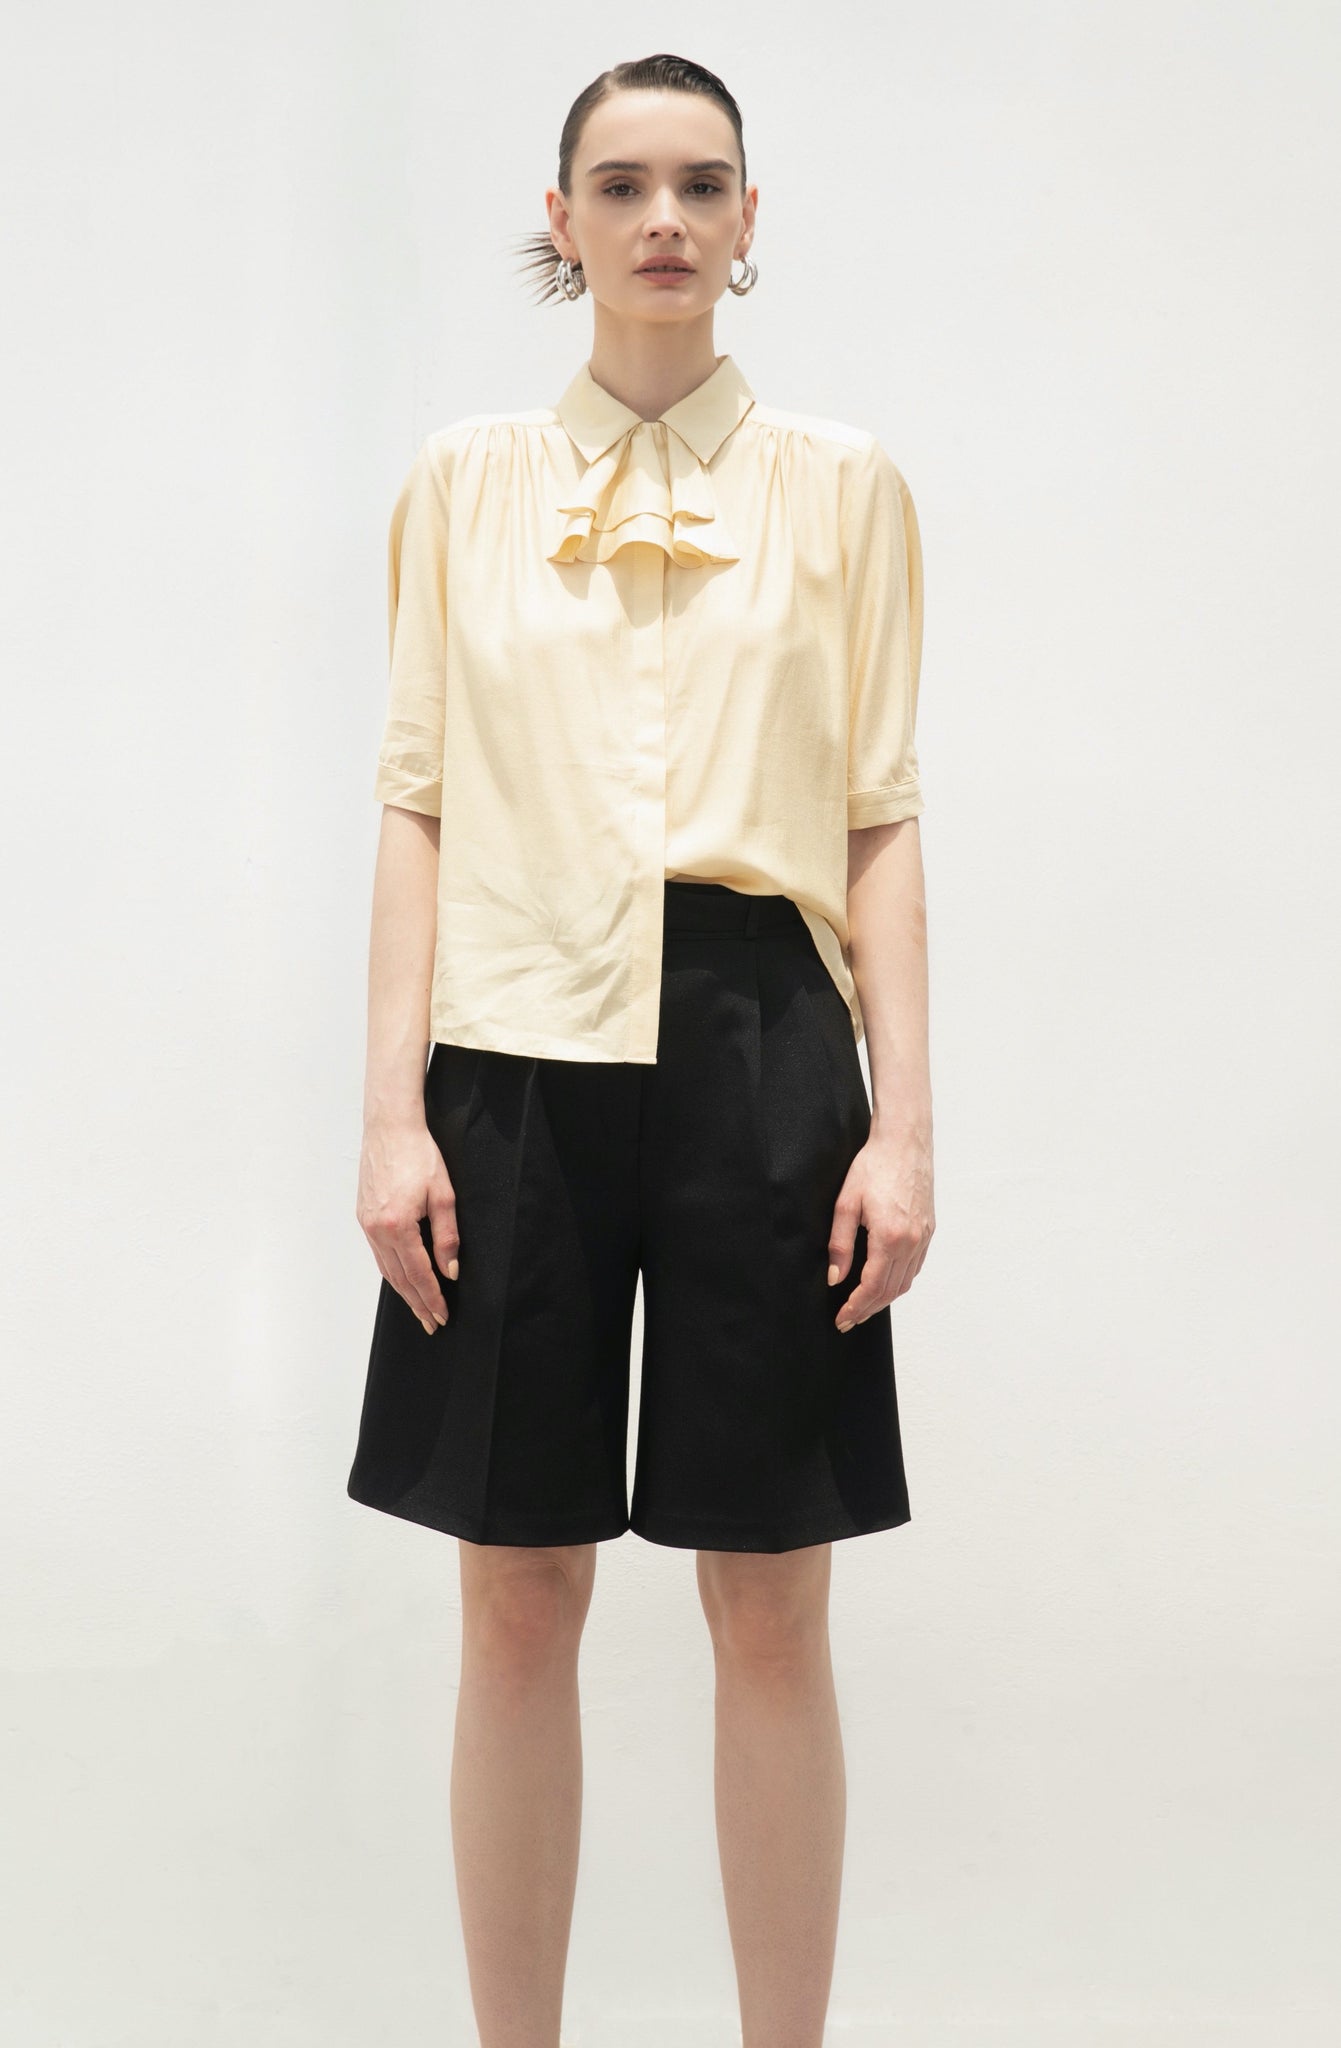 LINDONG | Elea Yellow Silky Bow Shirt